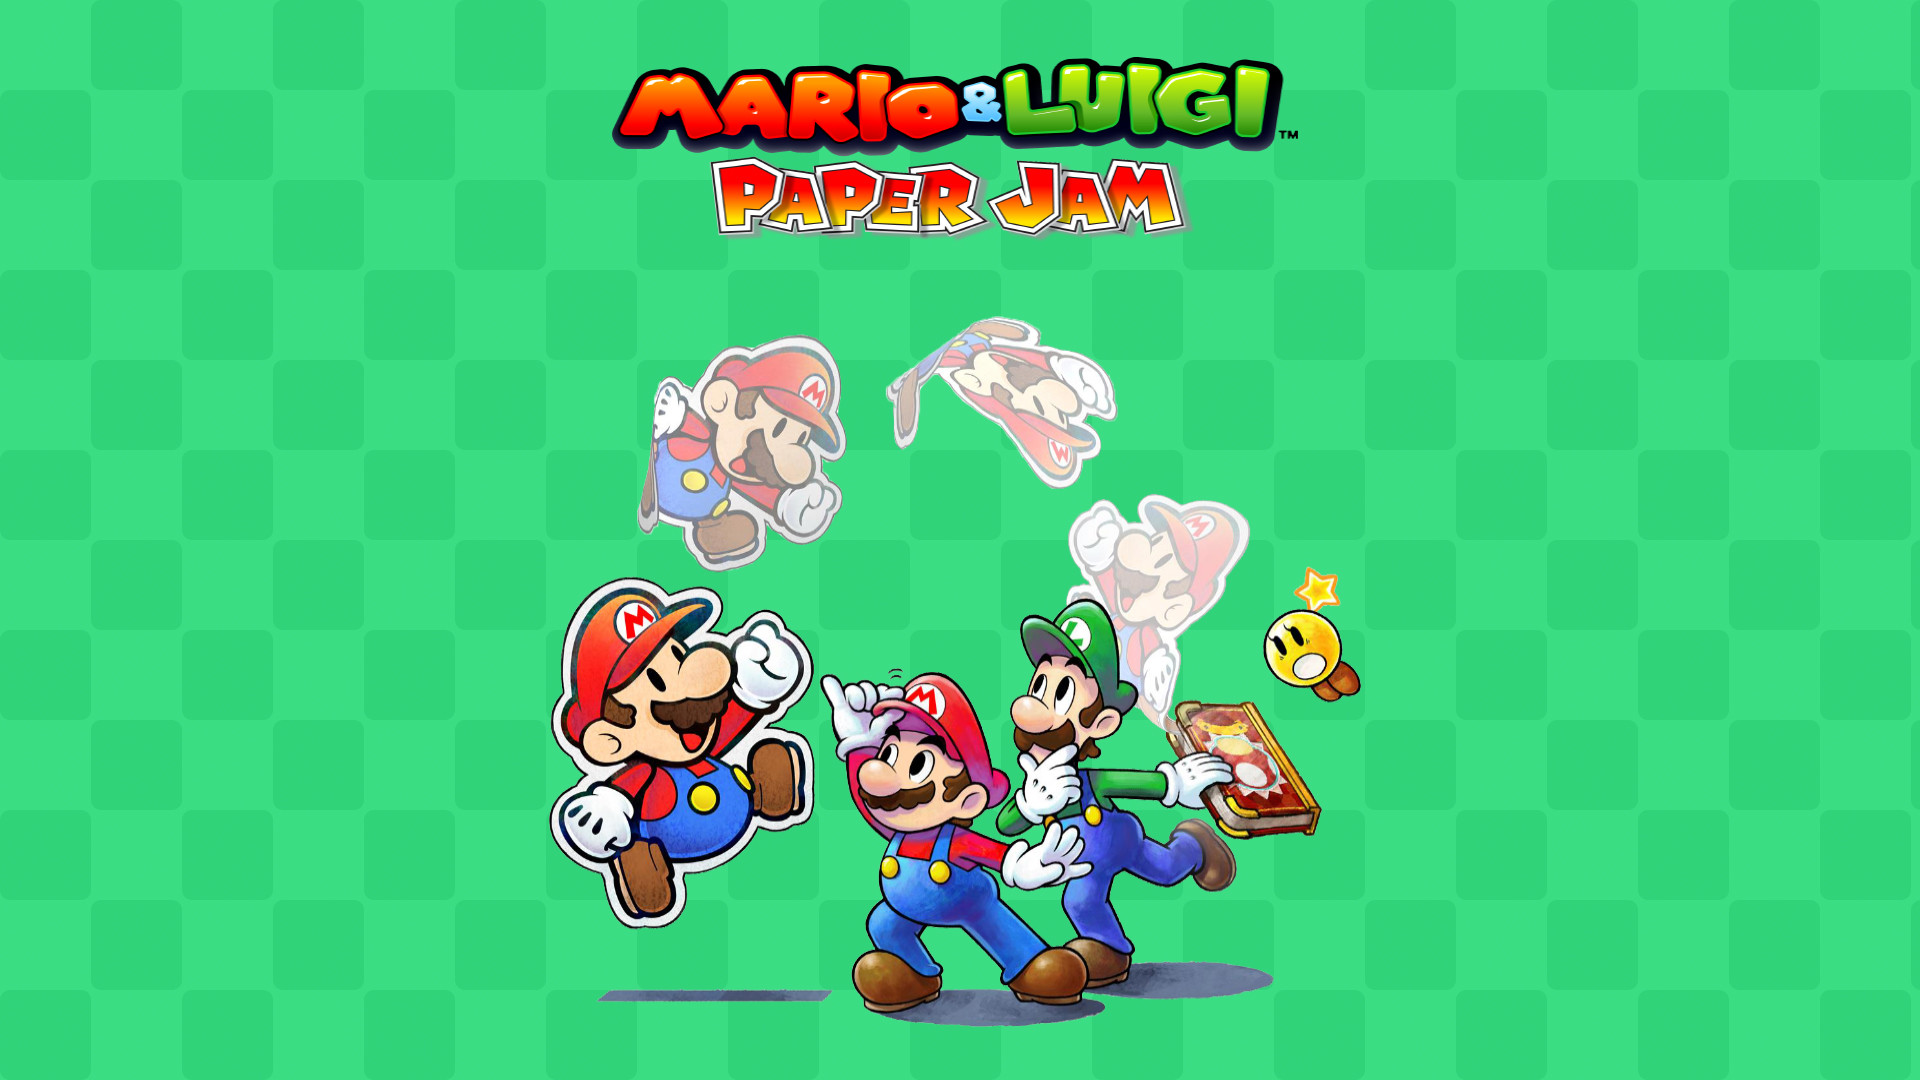 1920x1080 4 Mario & Luigi: Paper Jam HD Wallpapers | Backgrounds - Wallpaper Abyss